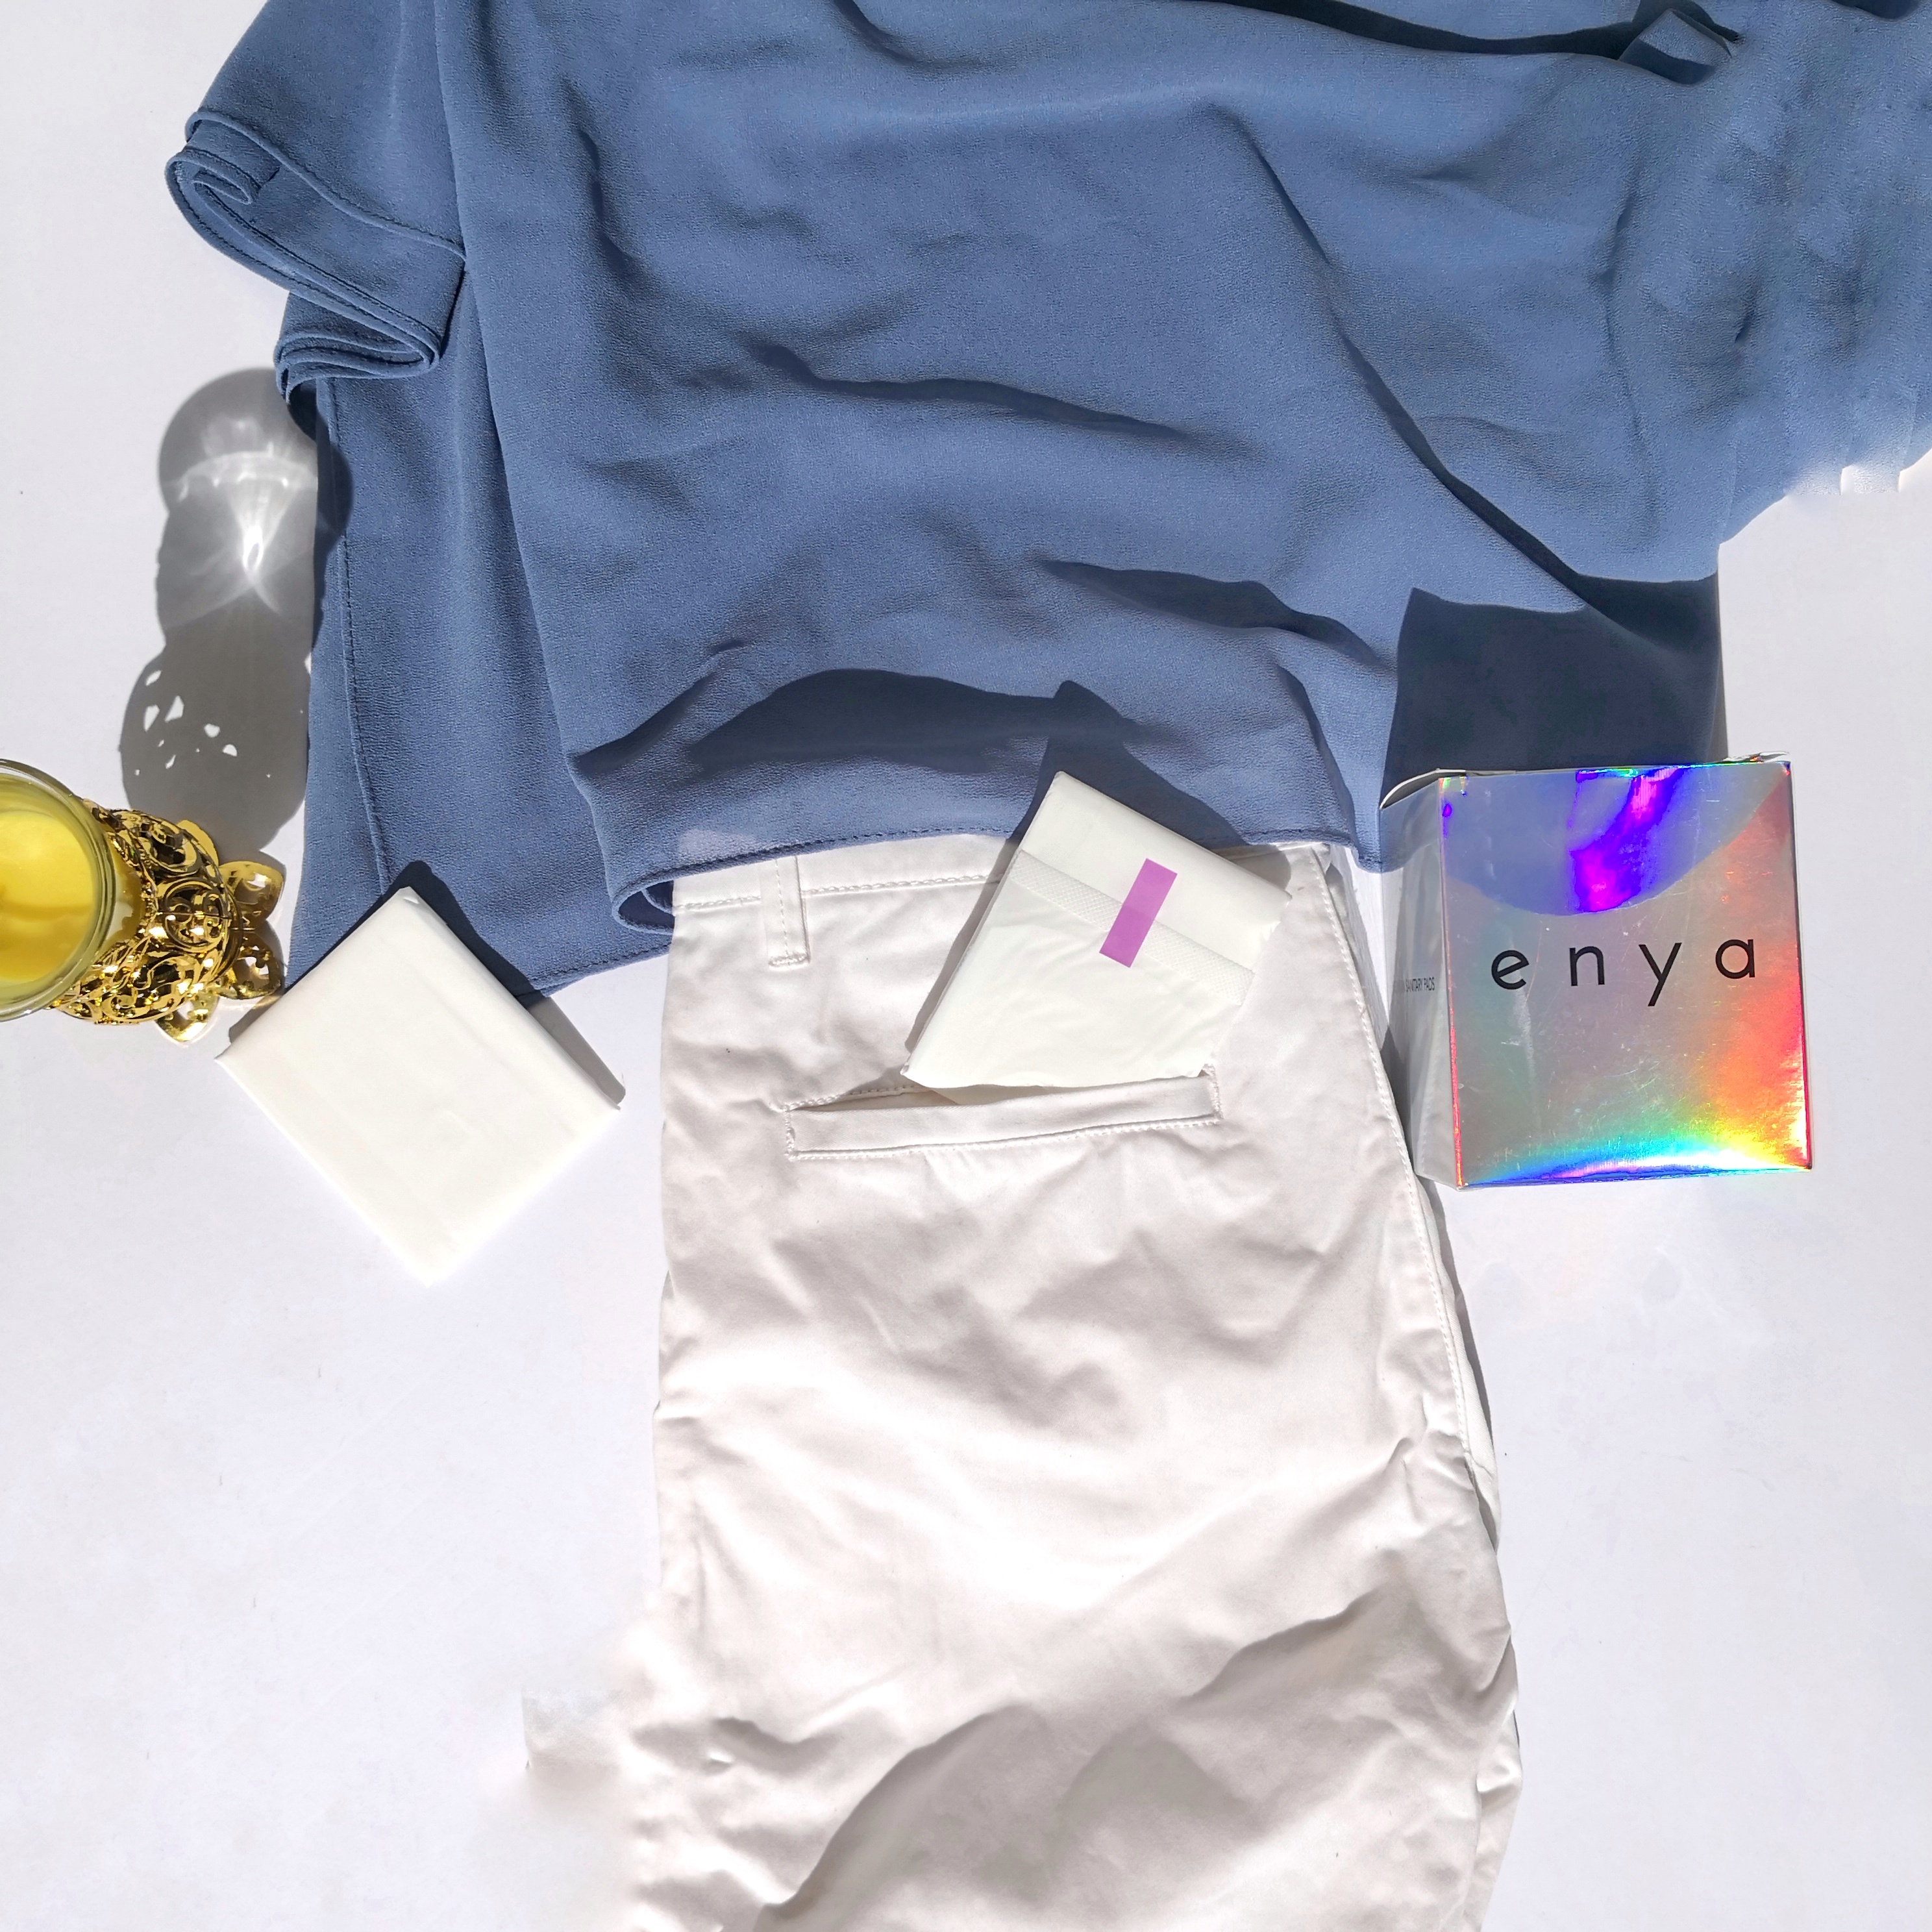 Happy Period Days with ENYA Premium Sanitary Pad by Myyskincare